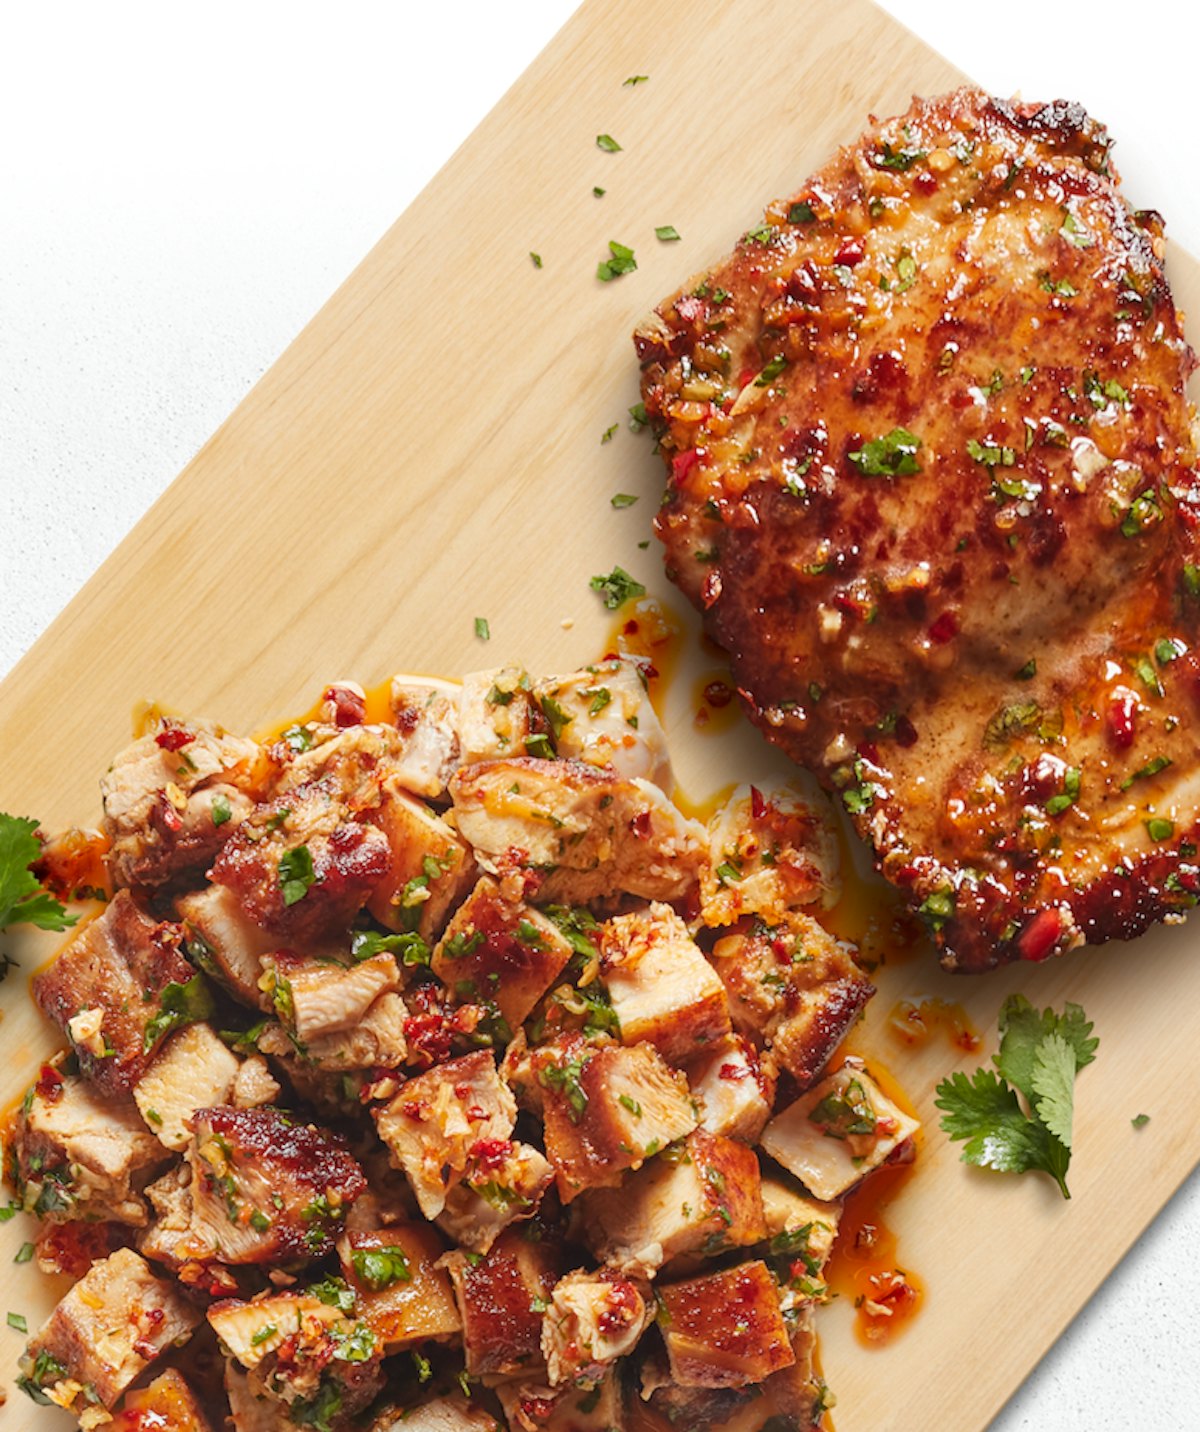 Chipotle releases new chicken asado menu option.